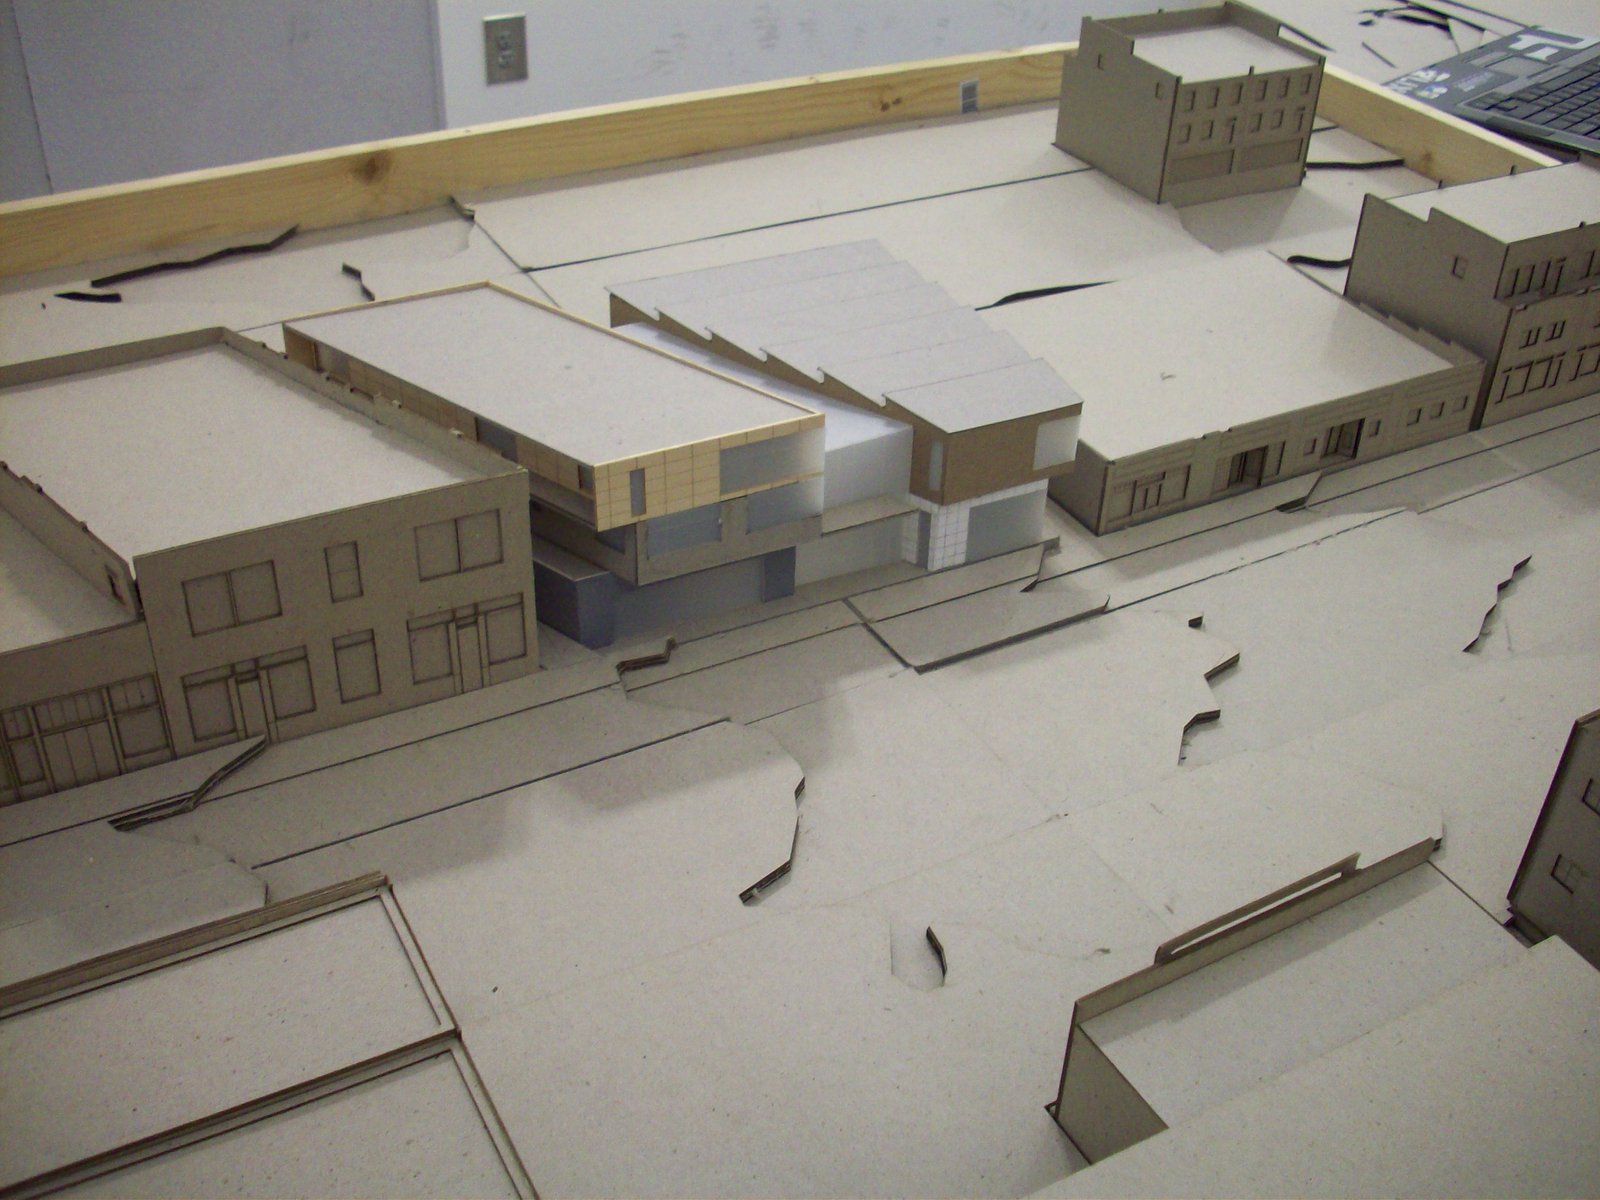 Model of my design for architecture studio